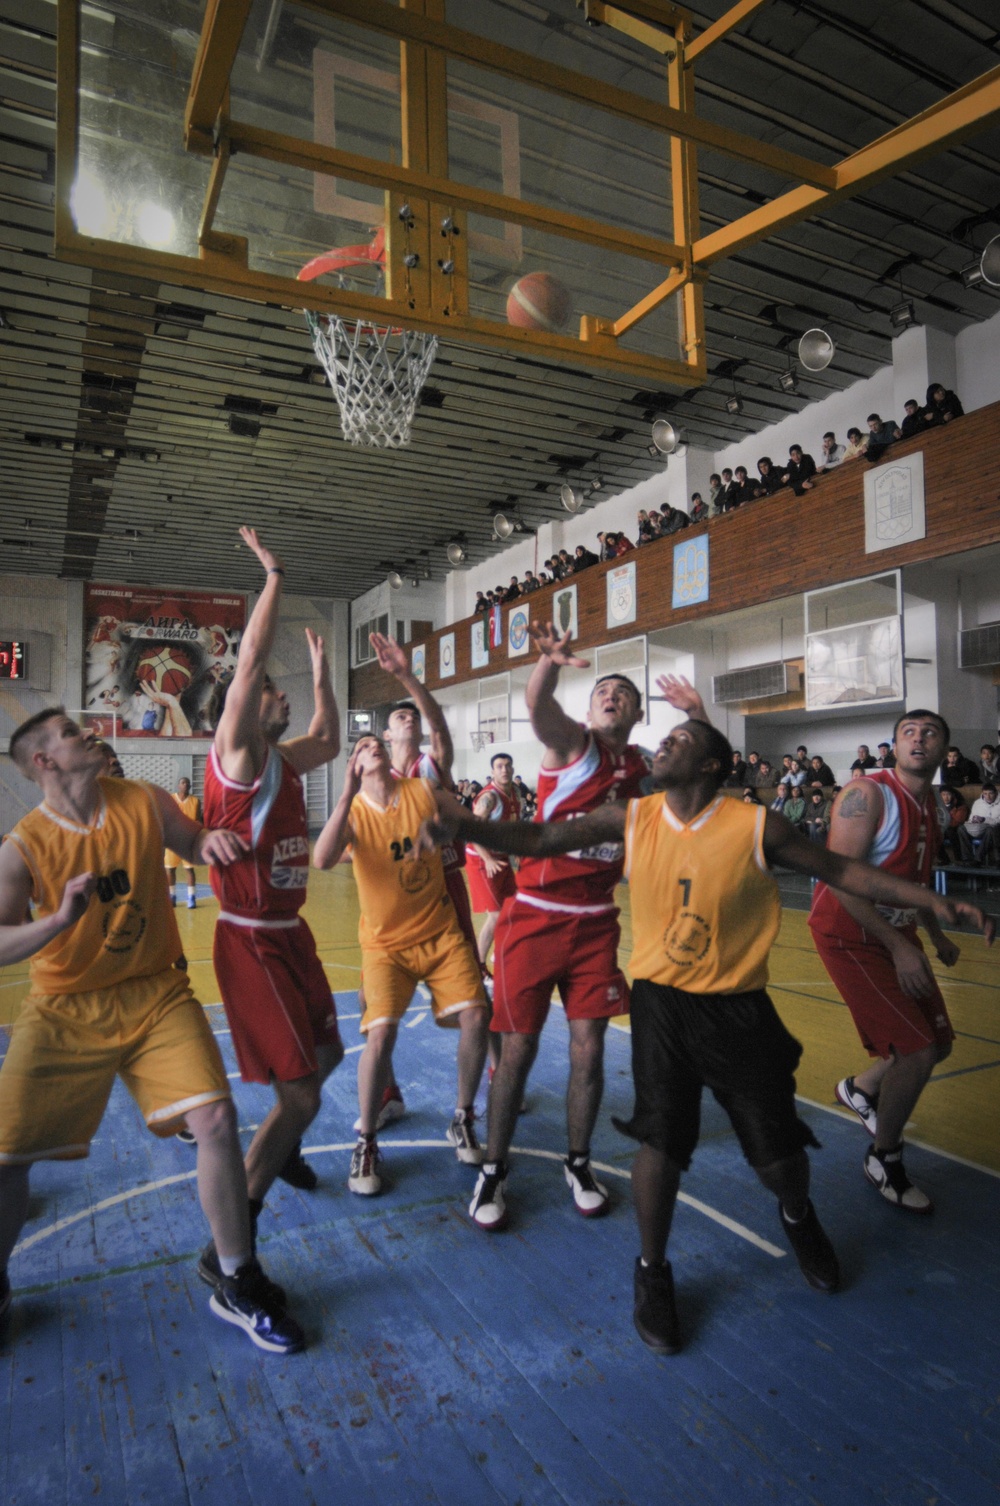 US-Azerbaijian basketball game